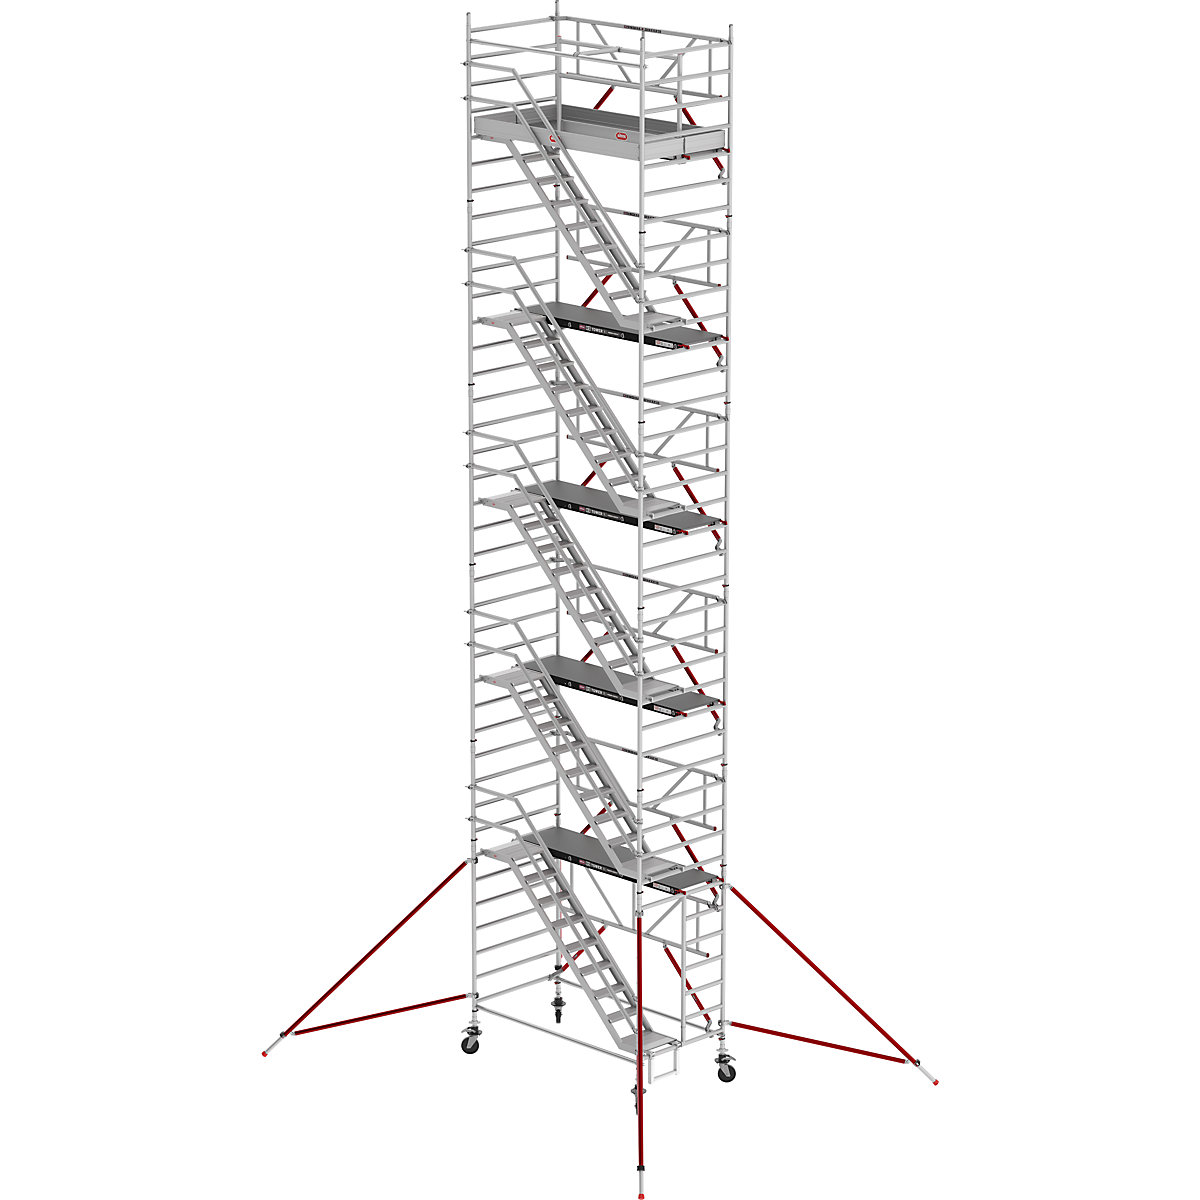 Oder s stopnicami RS TOWER 53, širok – Altrex, Fiber-Deck®, dolžina 1,85 m, delovna višina 12,20 m